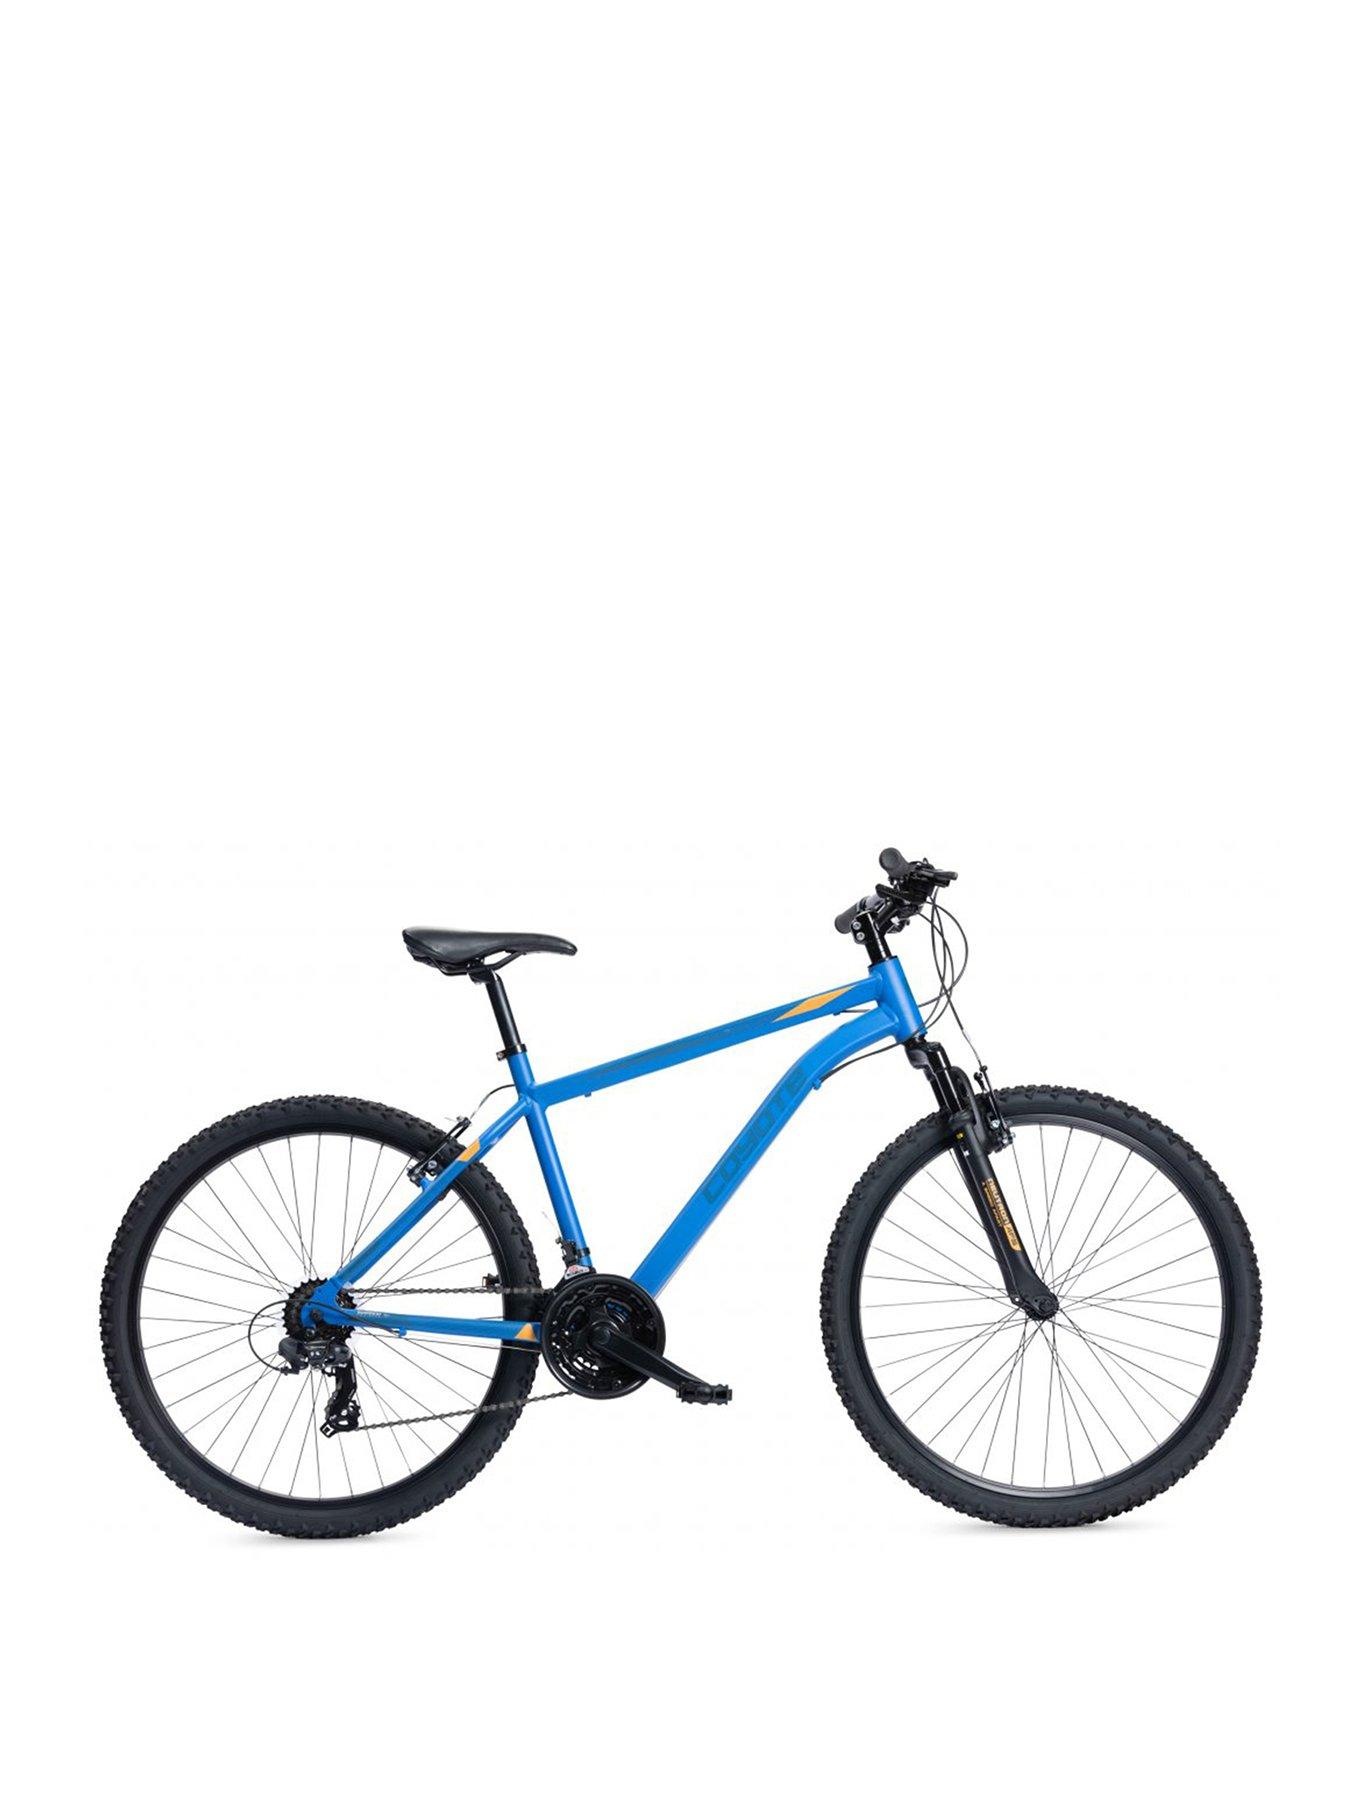 mens mountain bike 26 inch wheels